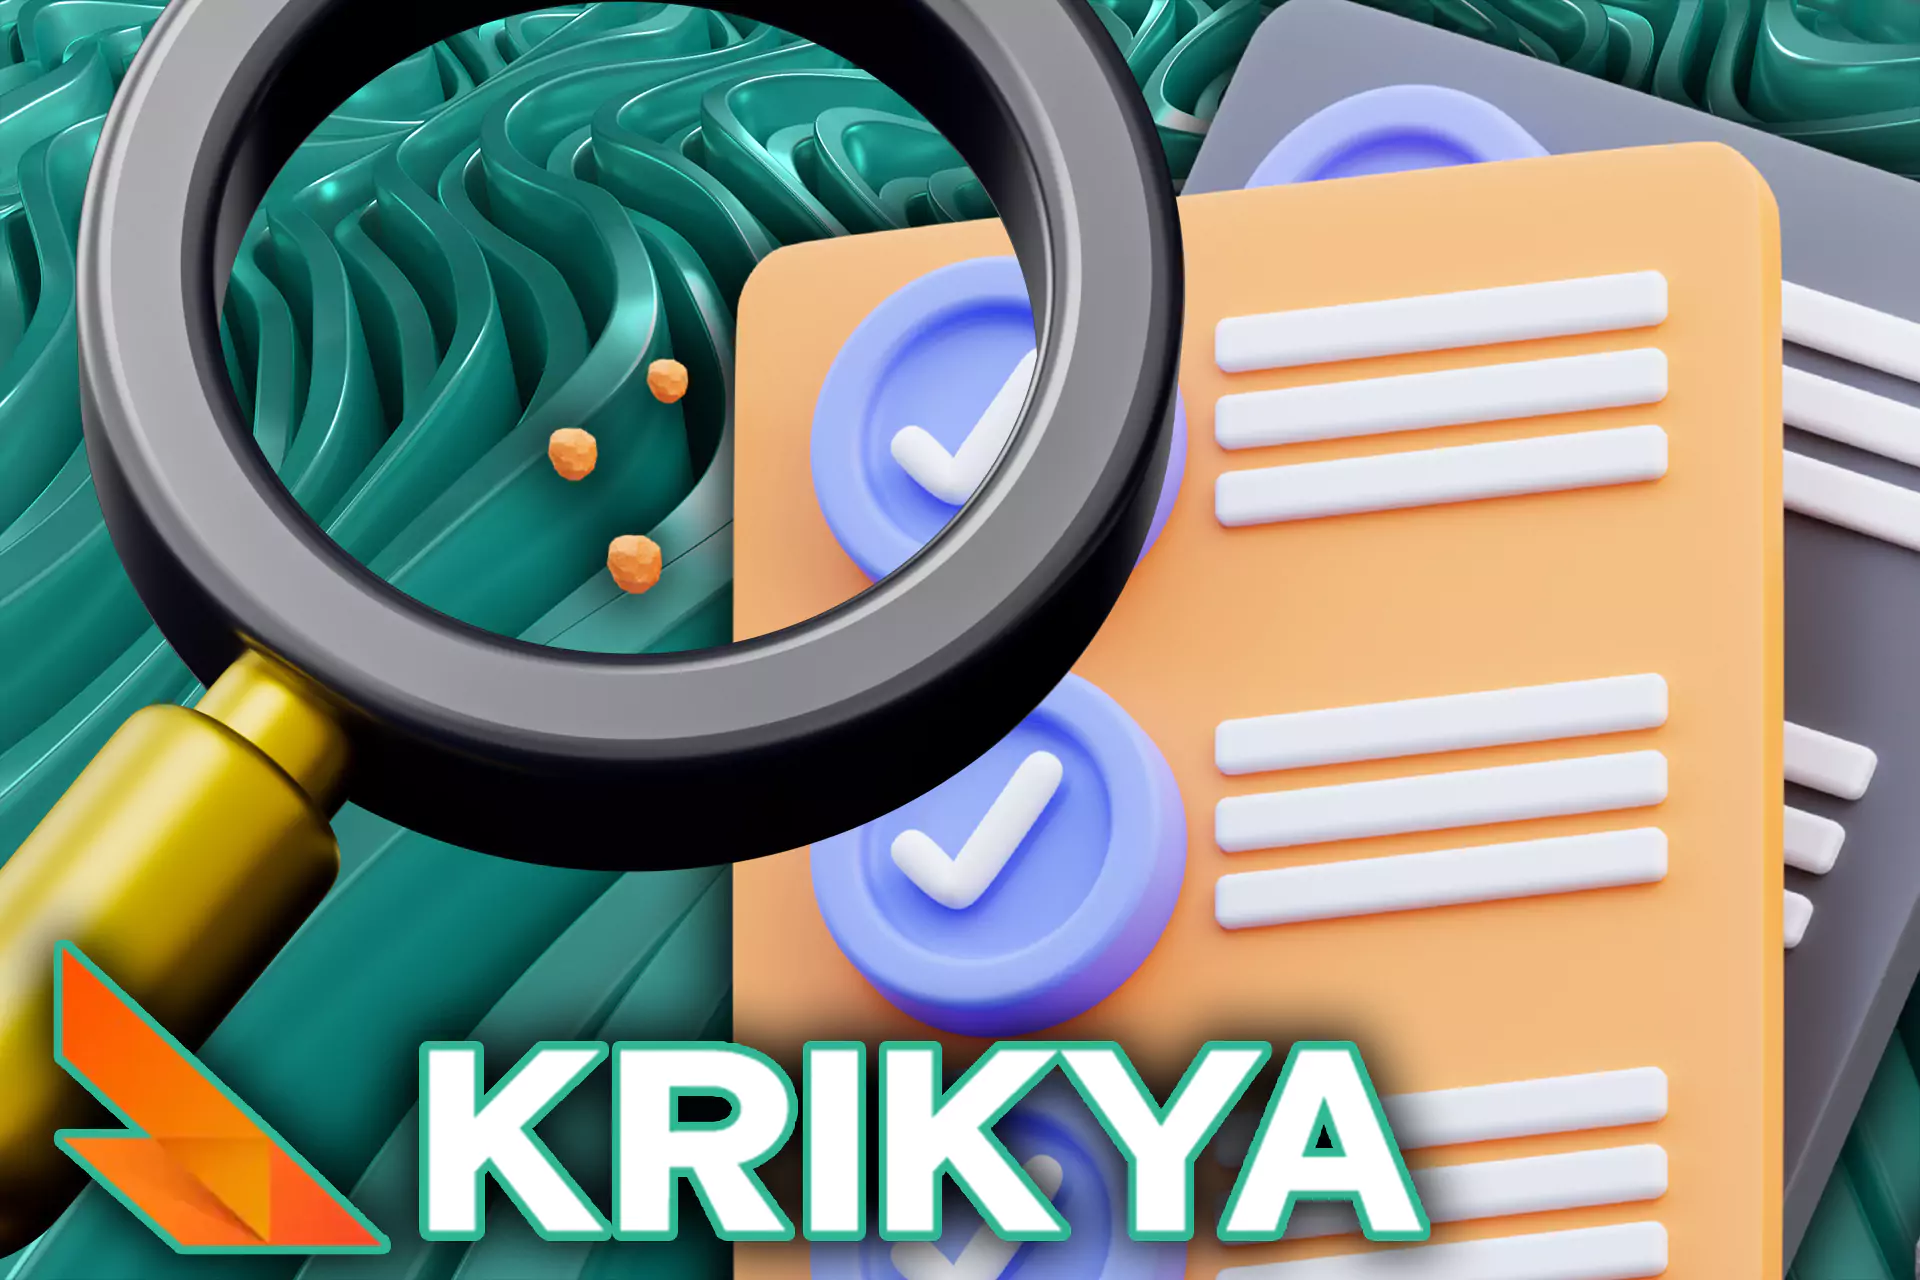 Krikya has a print validation system.